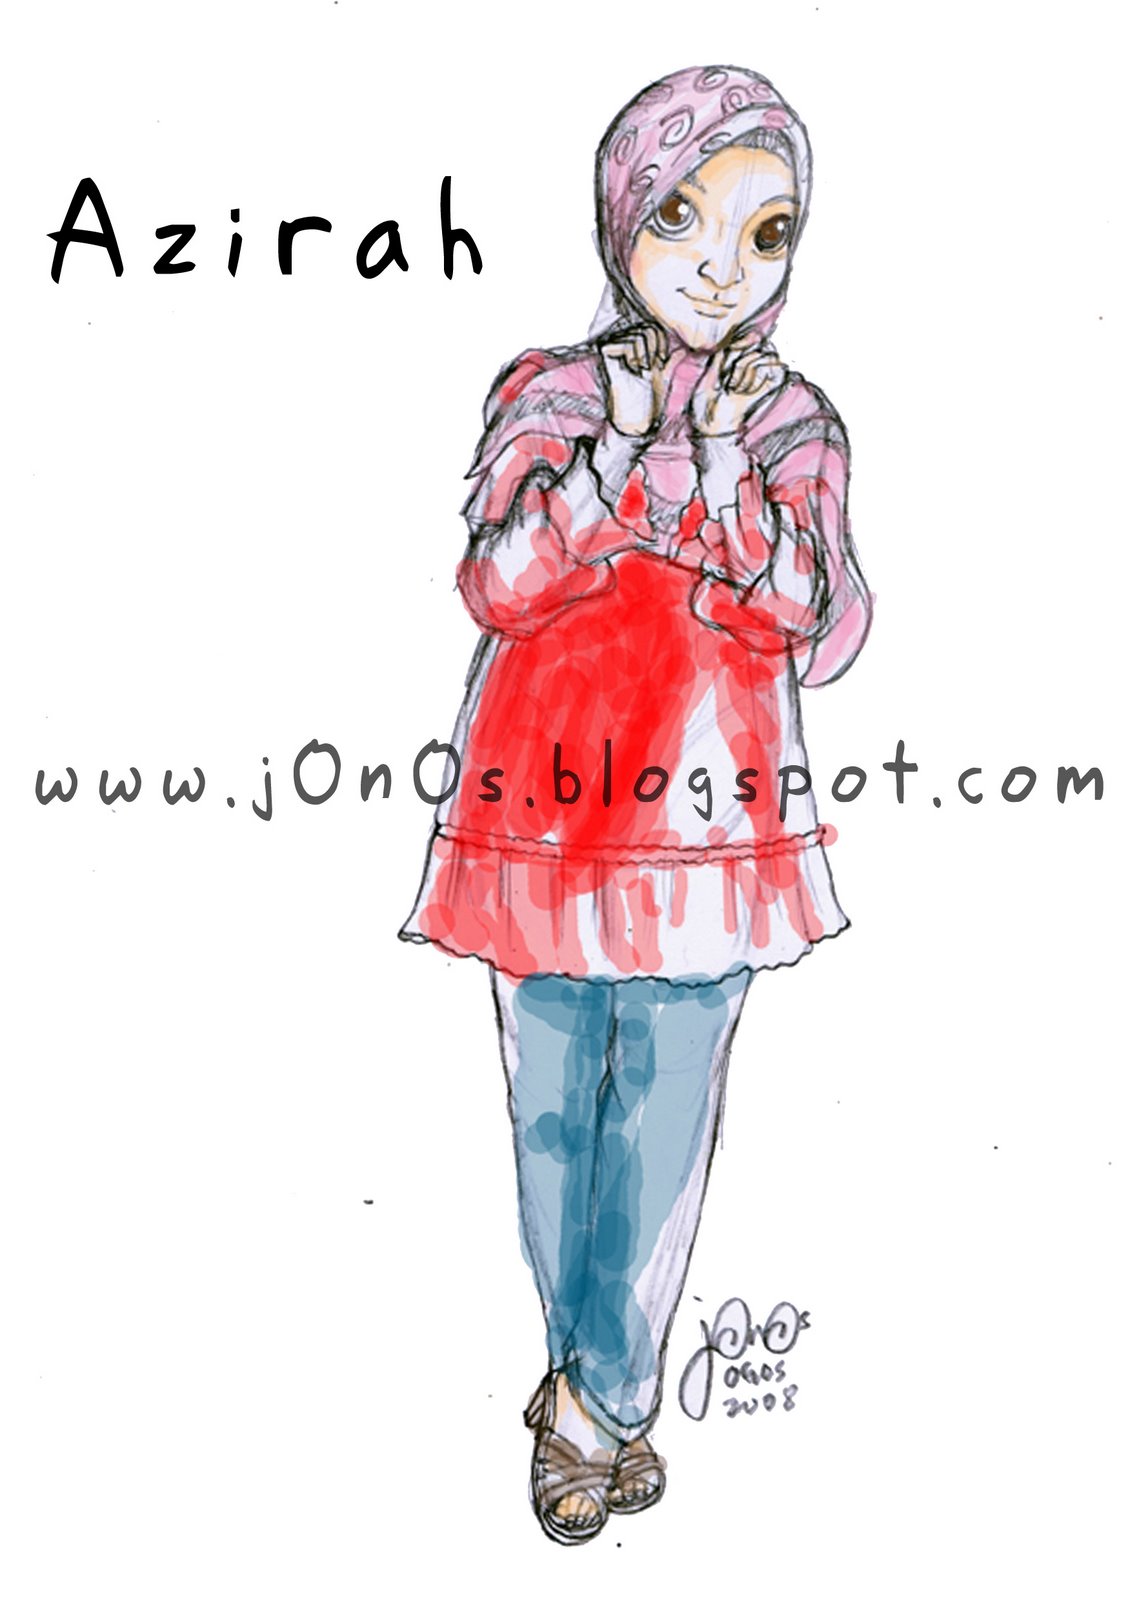 [Azirah-blog.jpg]